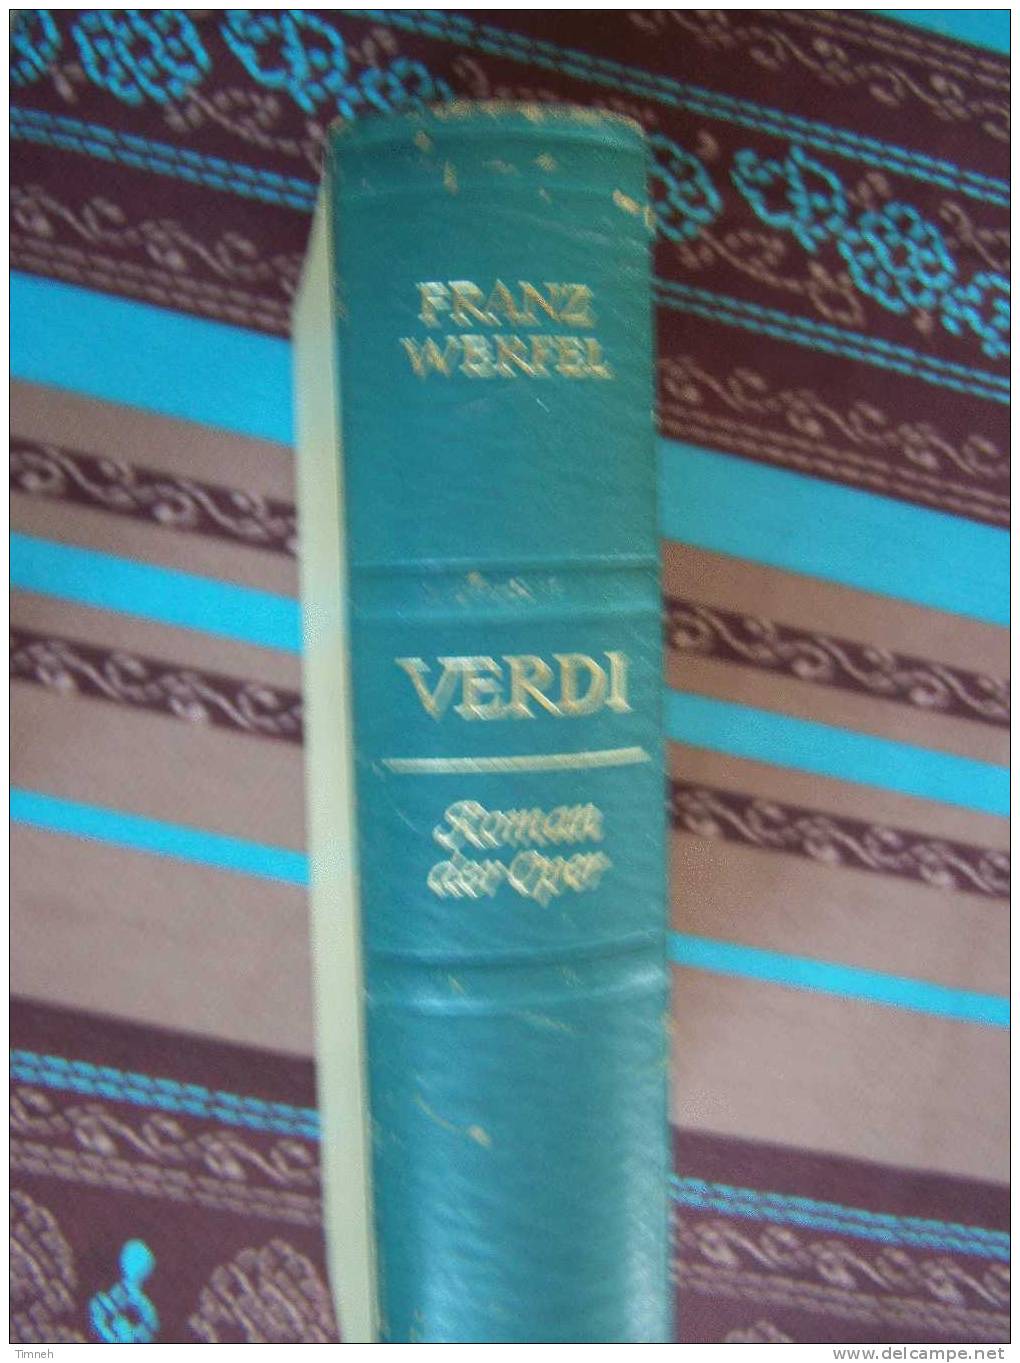 VERDI-Roman Der Oper-Franz Werfel-1955-Deutsche Buch Gemeinschaft- - Biographies & Mémoirs